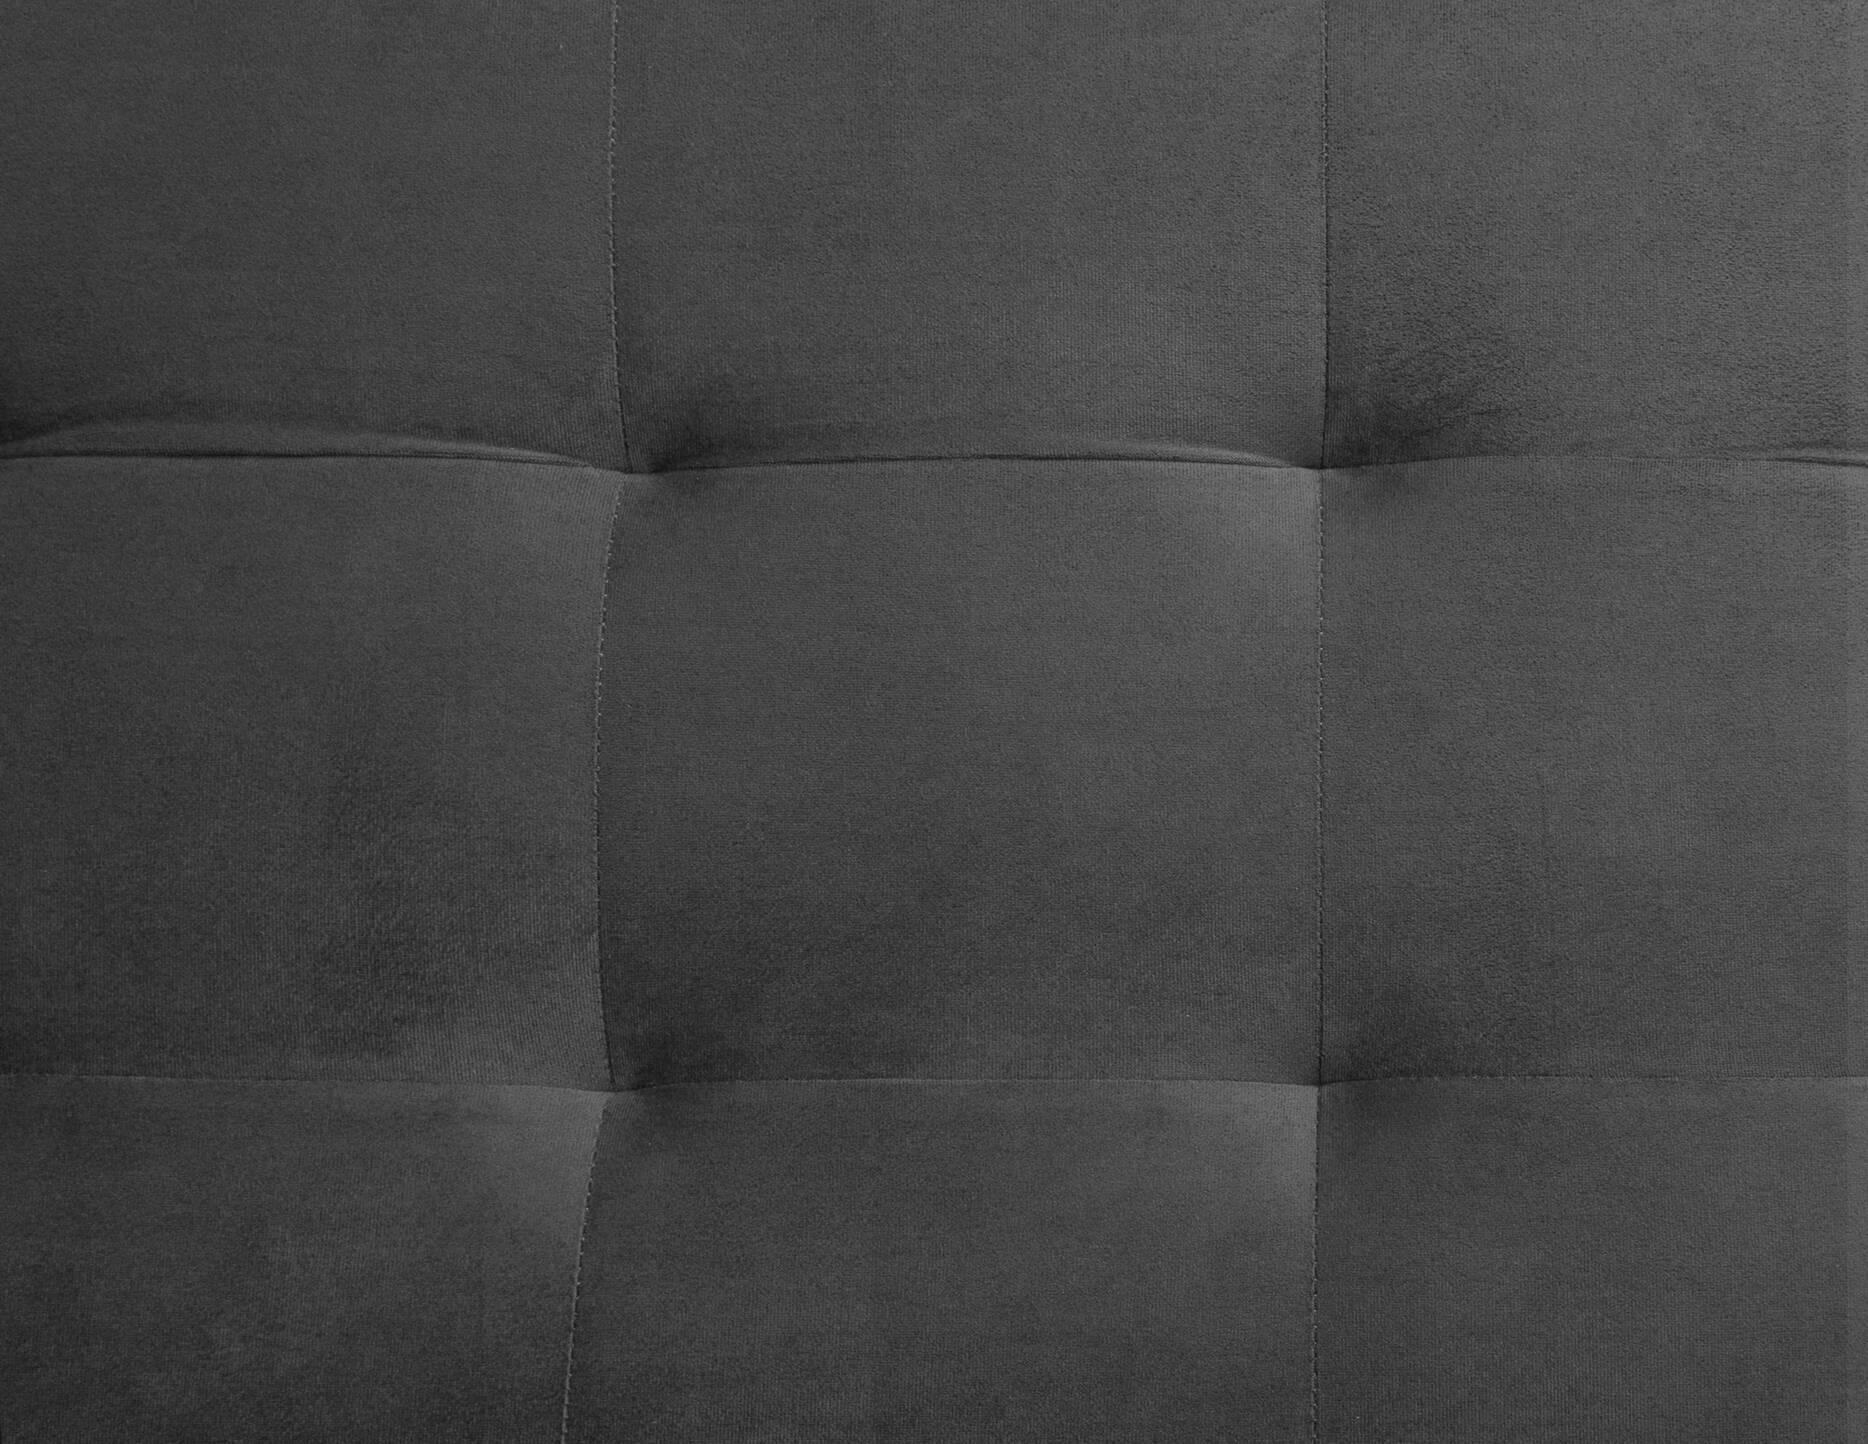 GLAMMI 3-Sitzer Sofa mit Samtbezug, Füße Buche massiv Grau